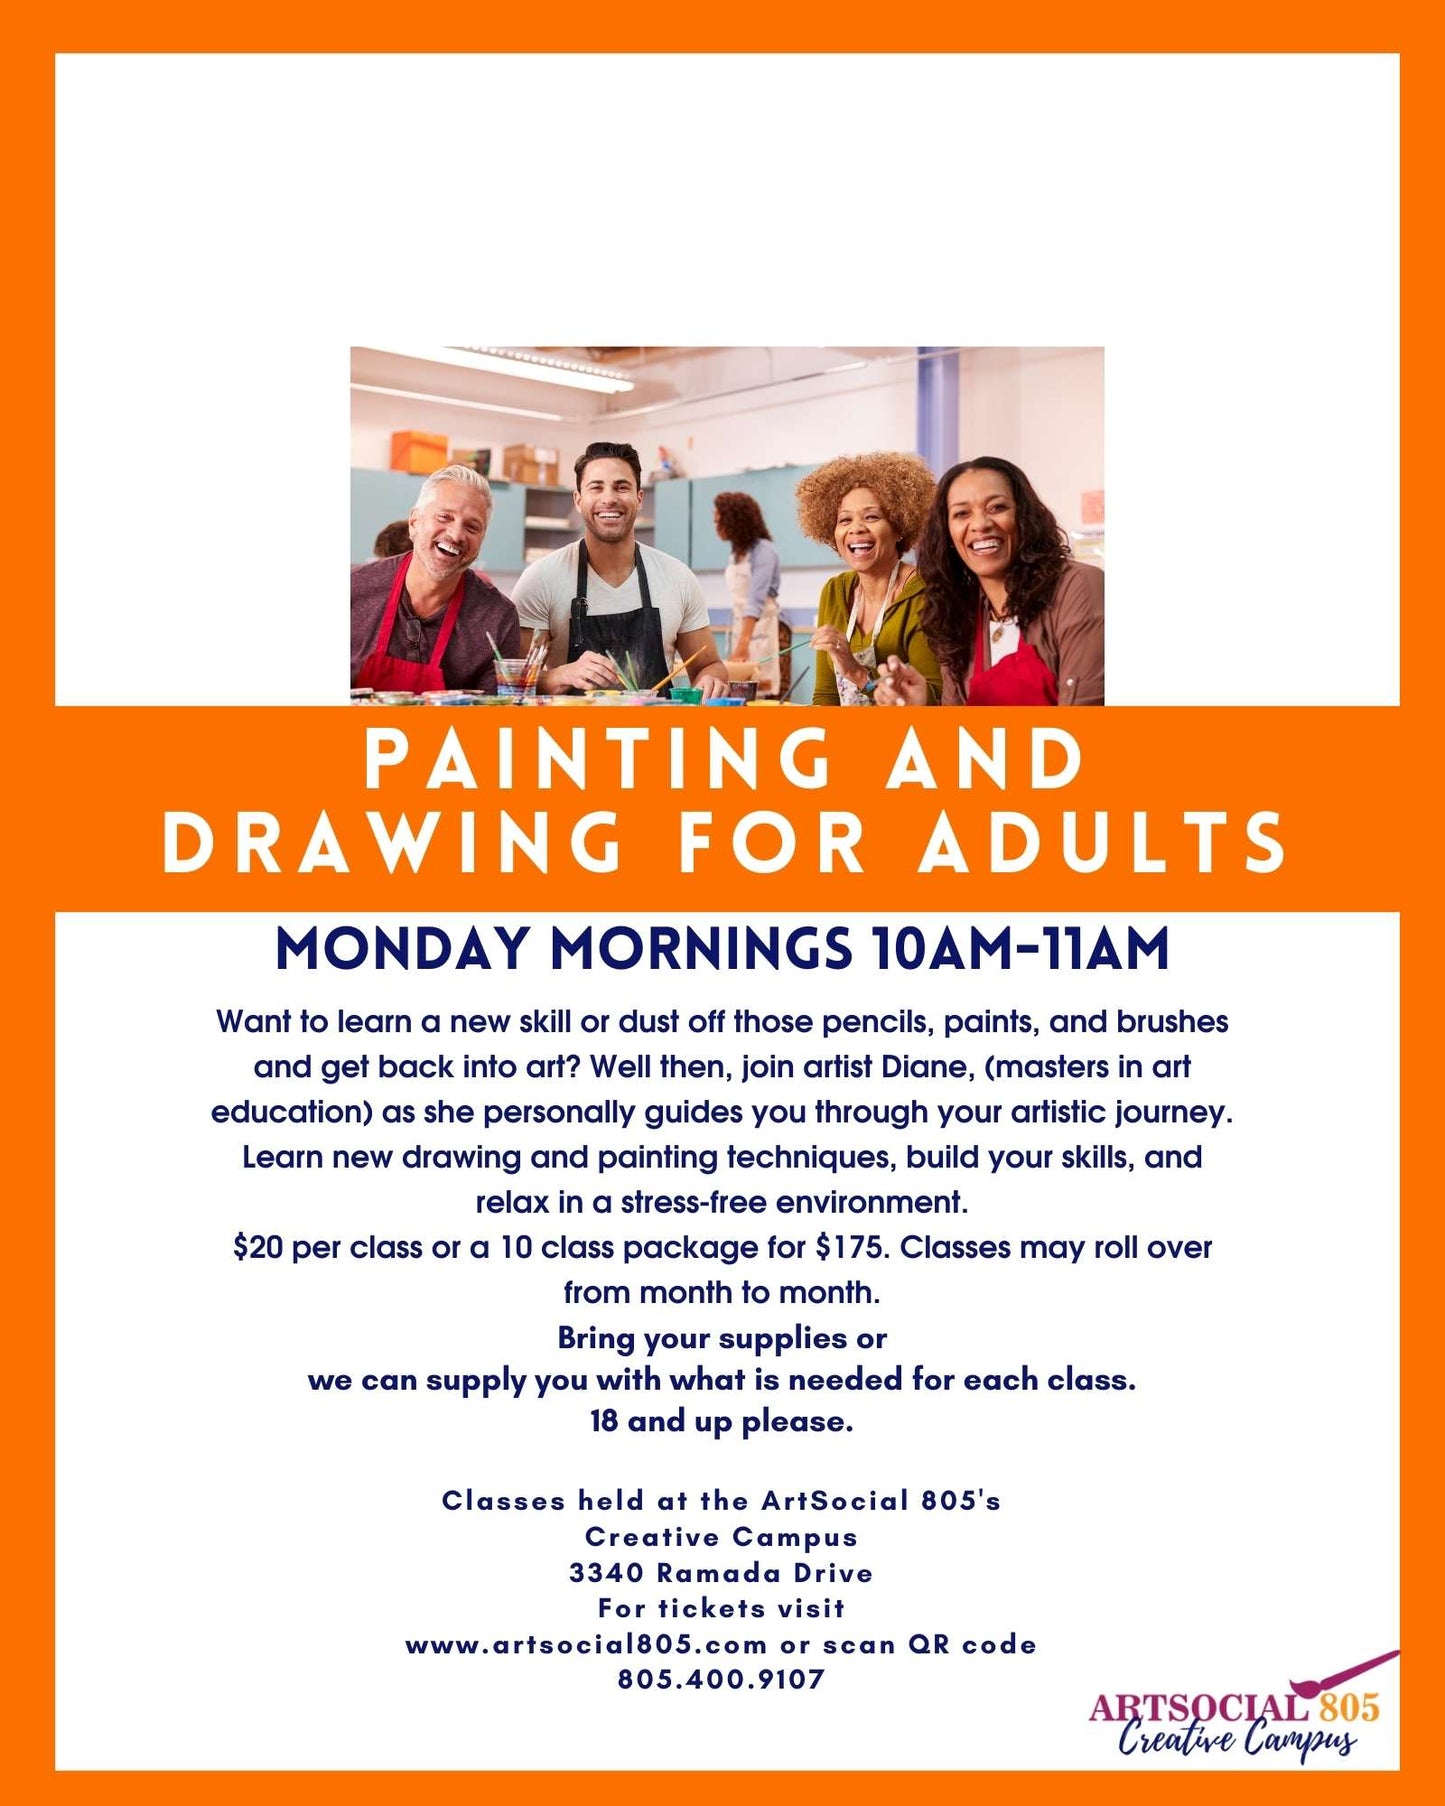 Adult Drawing and Painting at the ArtSocial 805 Creative Campus